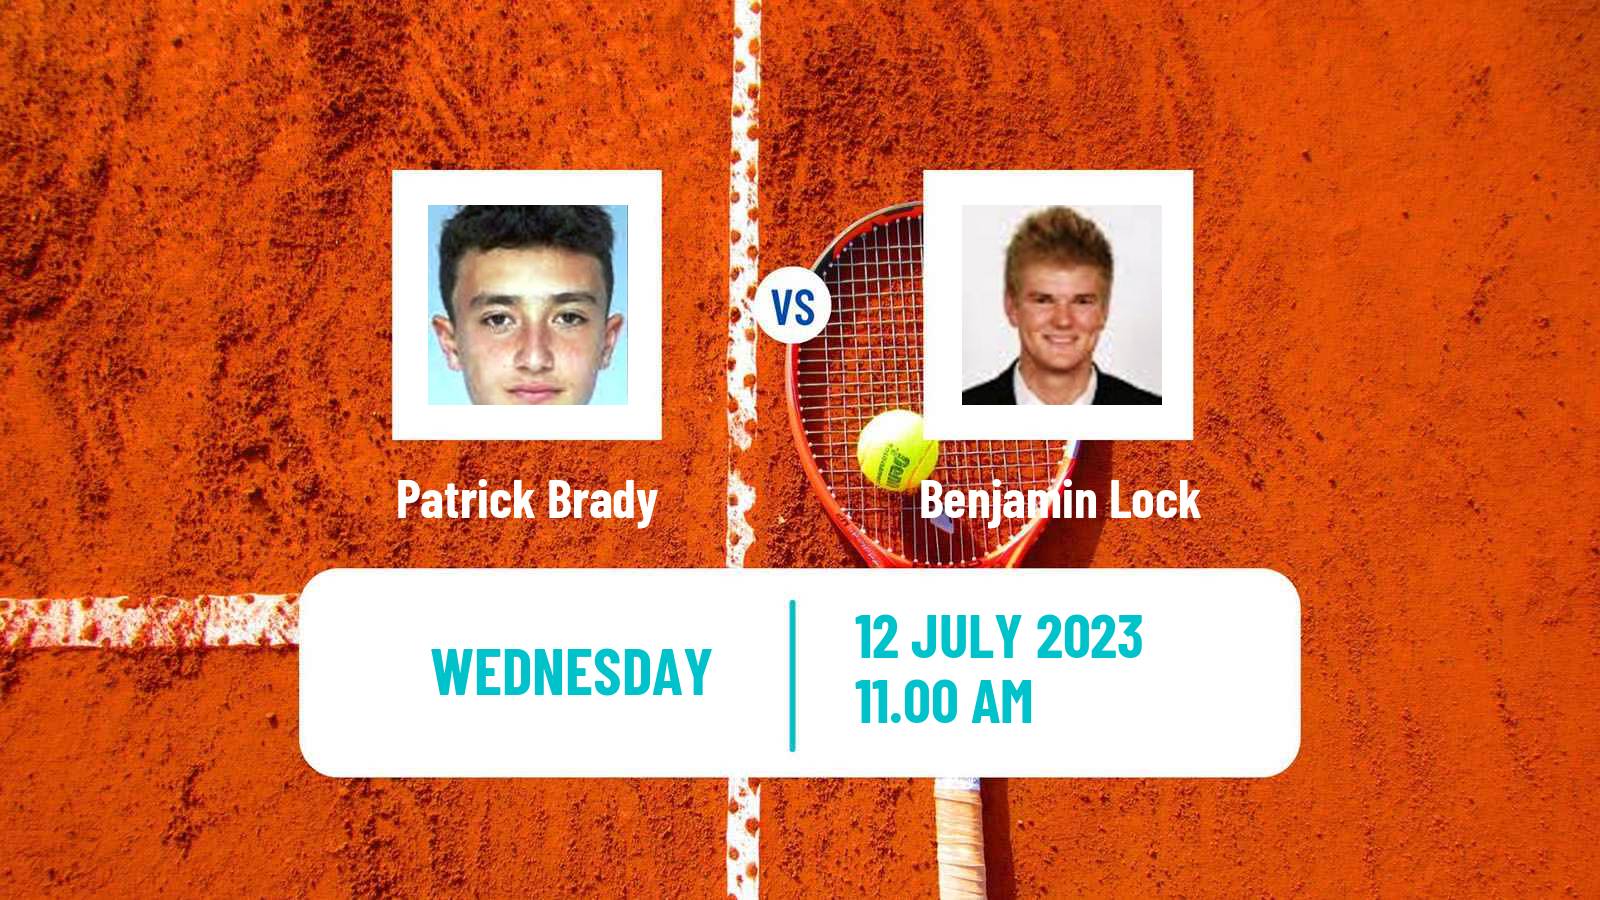 Tennis ITF M25 Nottingham 4 Men Patrick Brady - Benjamin Lock